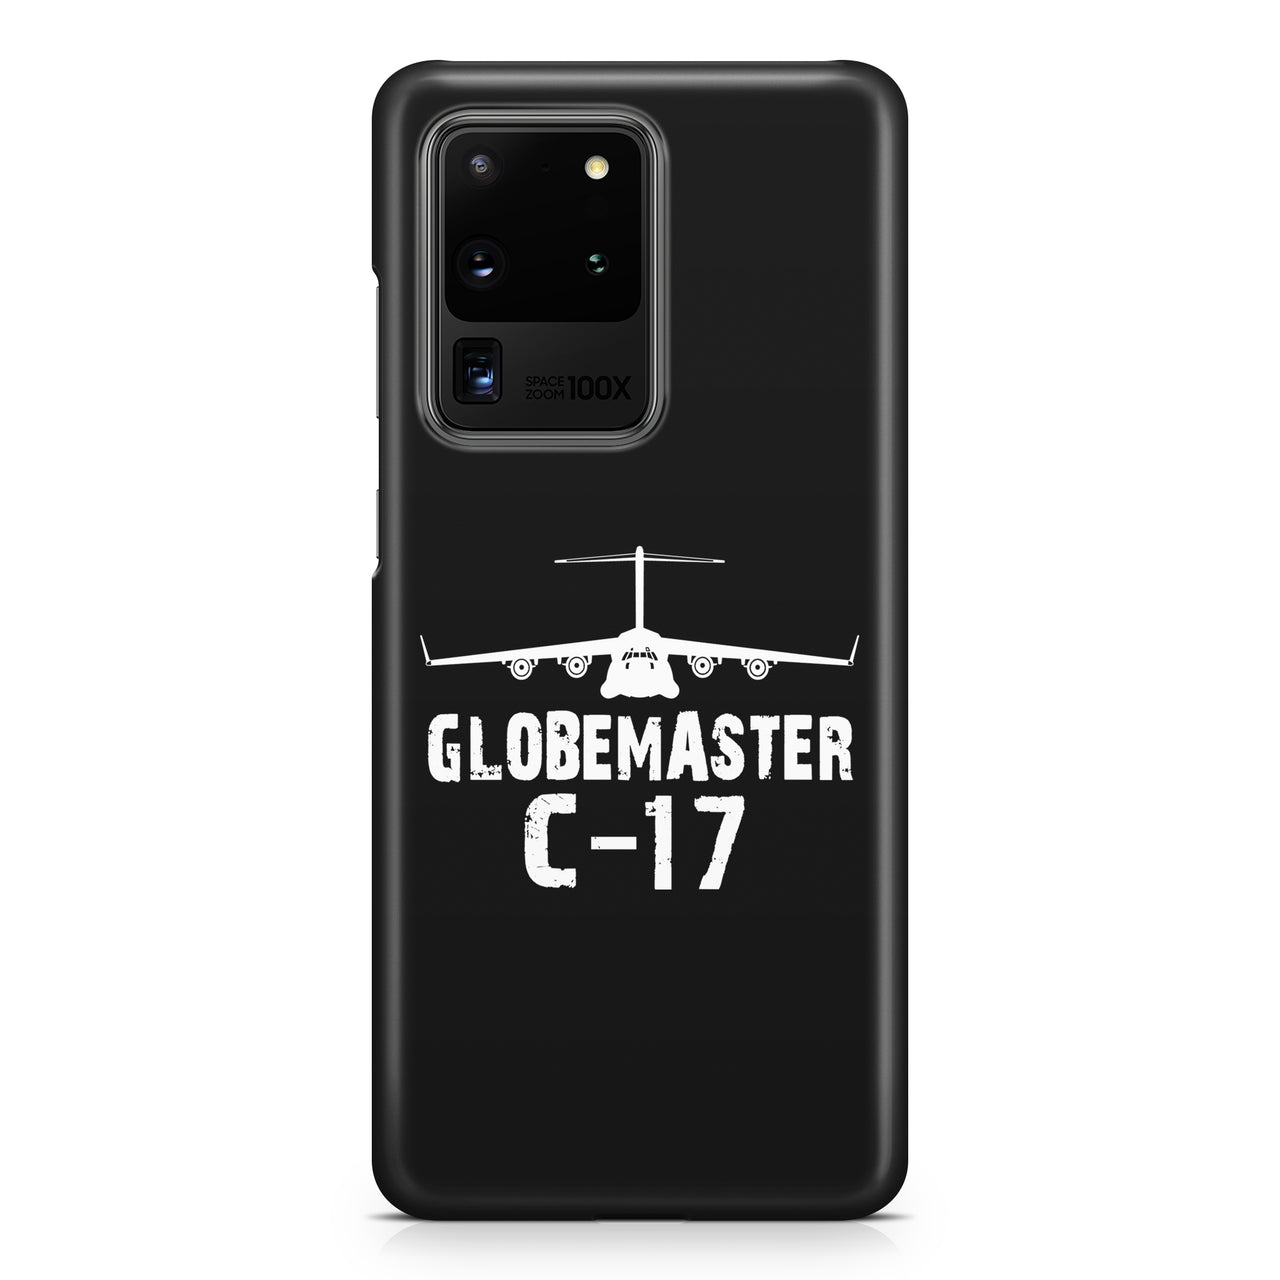 GlobeMaster C-17 & Plane Samsung S & Note Cases